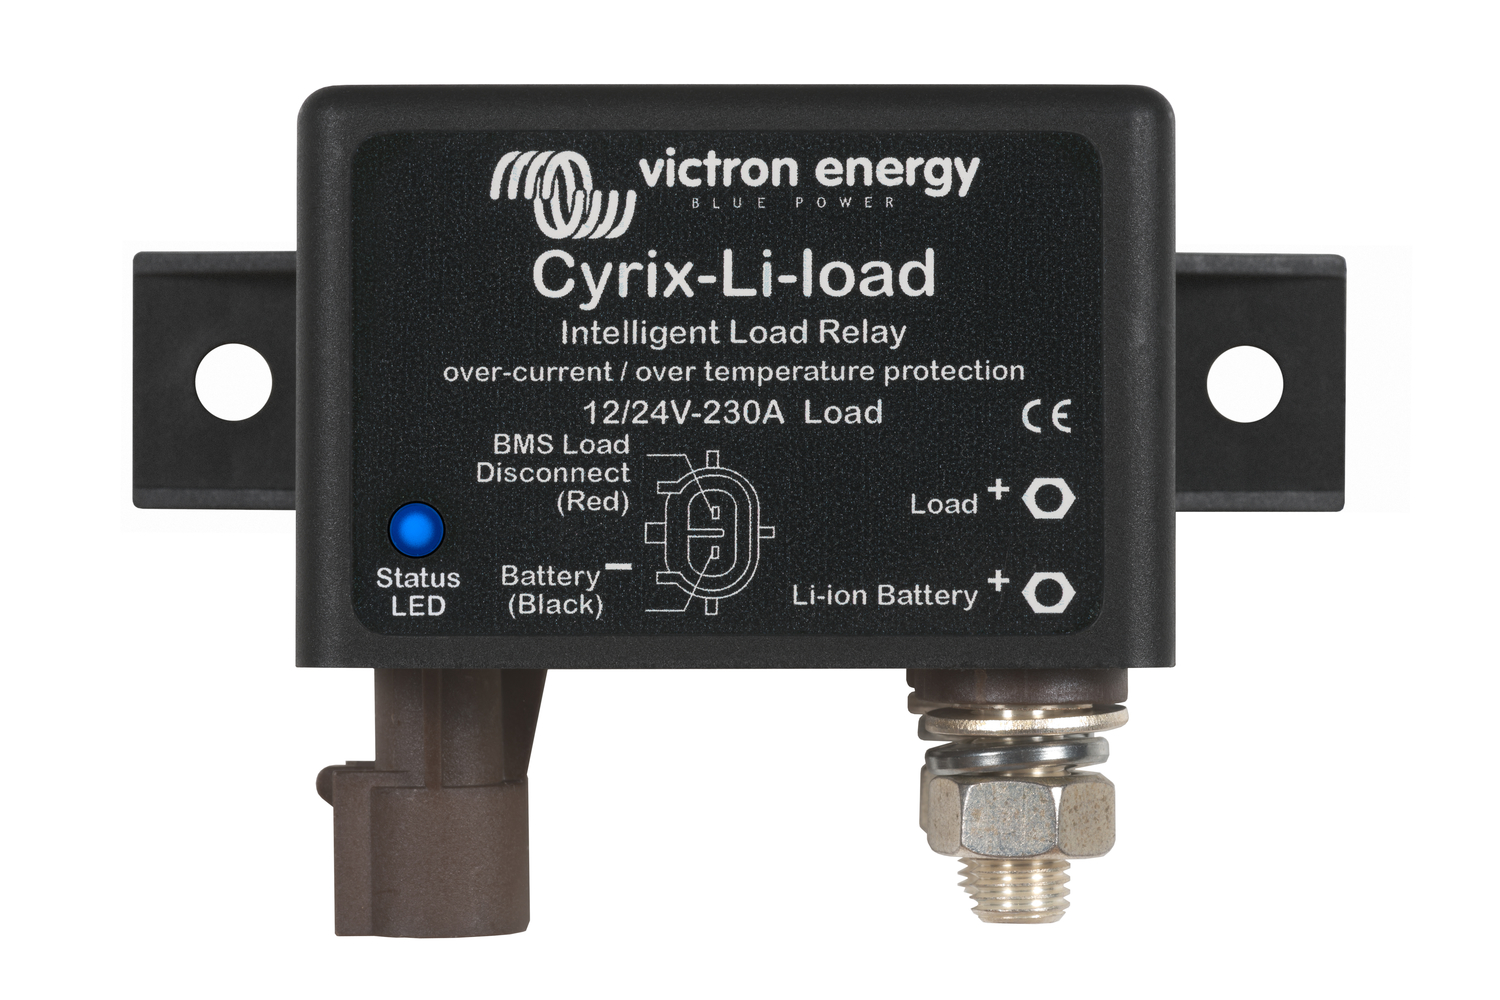 Victron - Cyrix-Li-load 12/24V-230A intelligent load relay